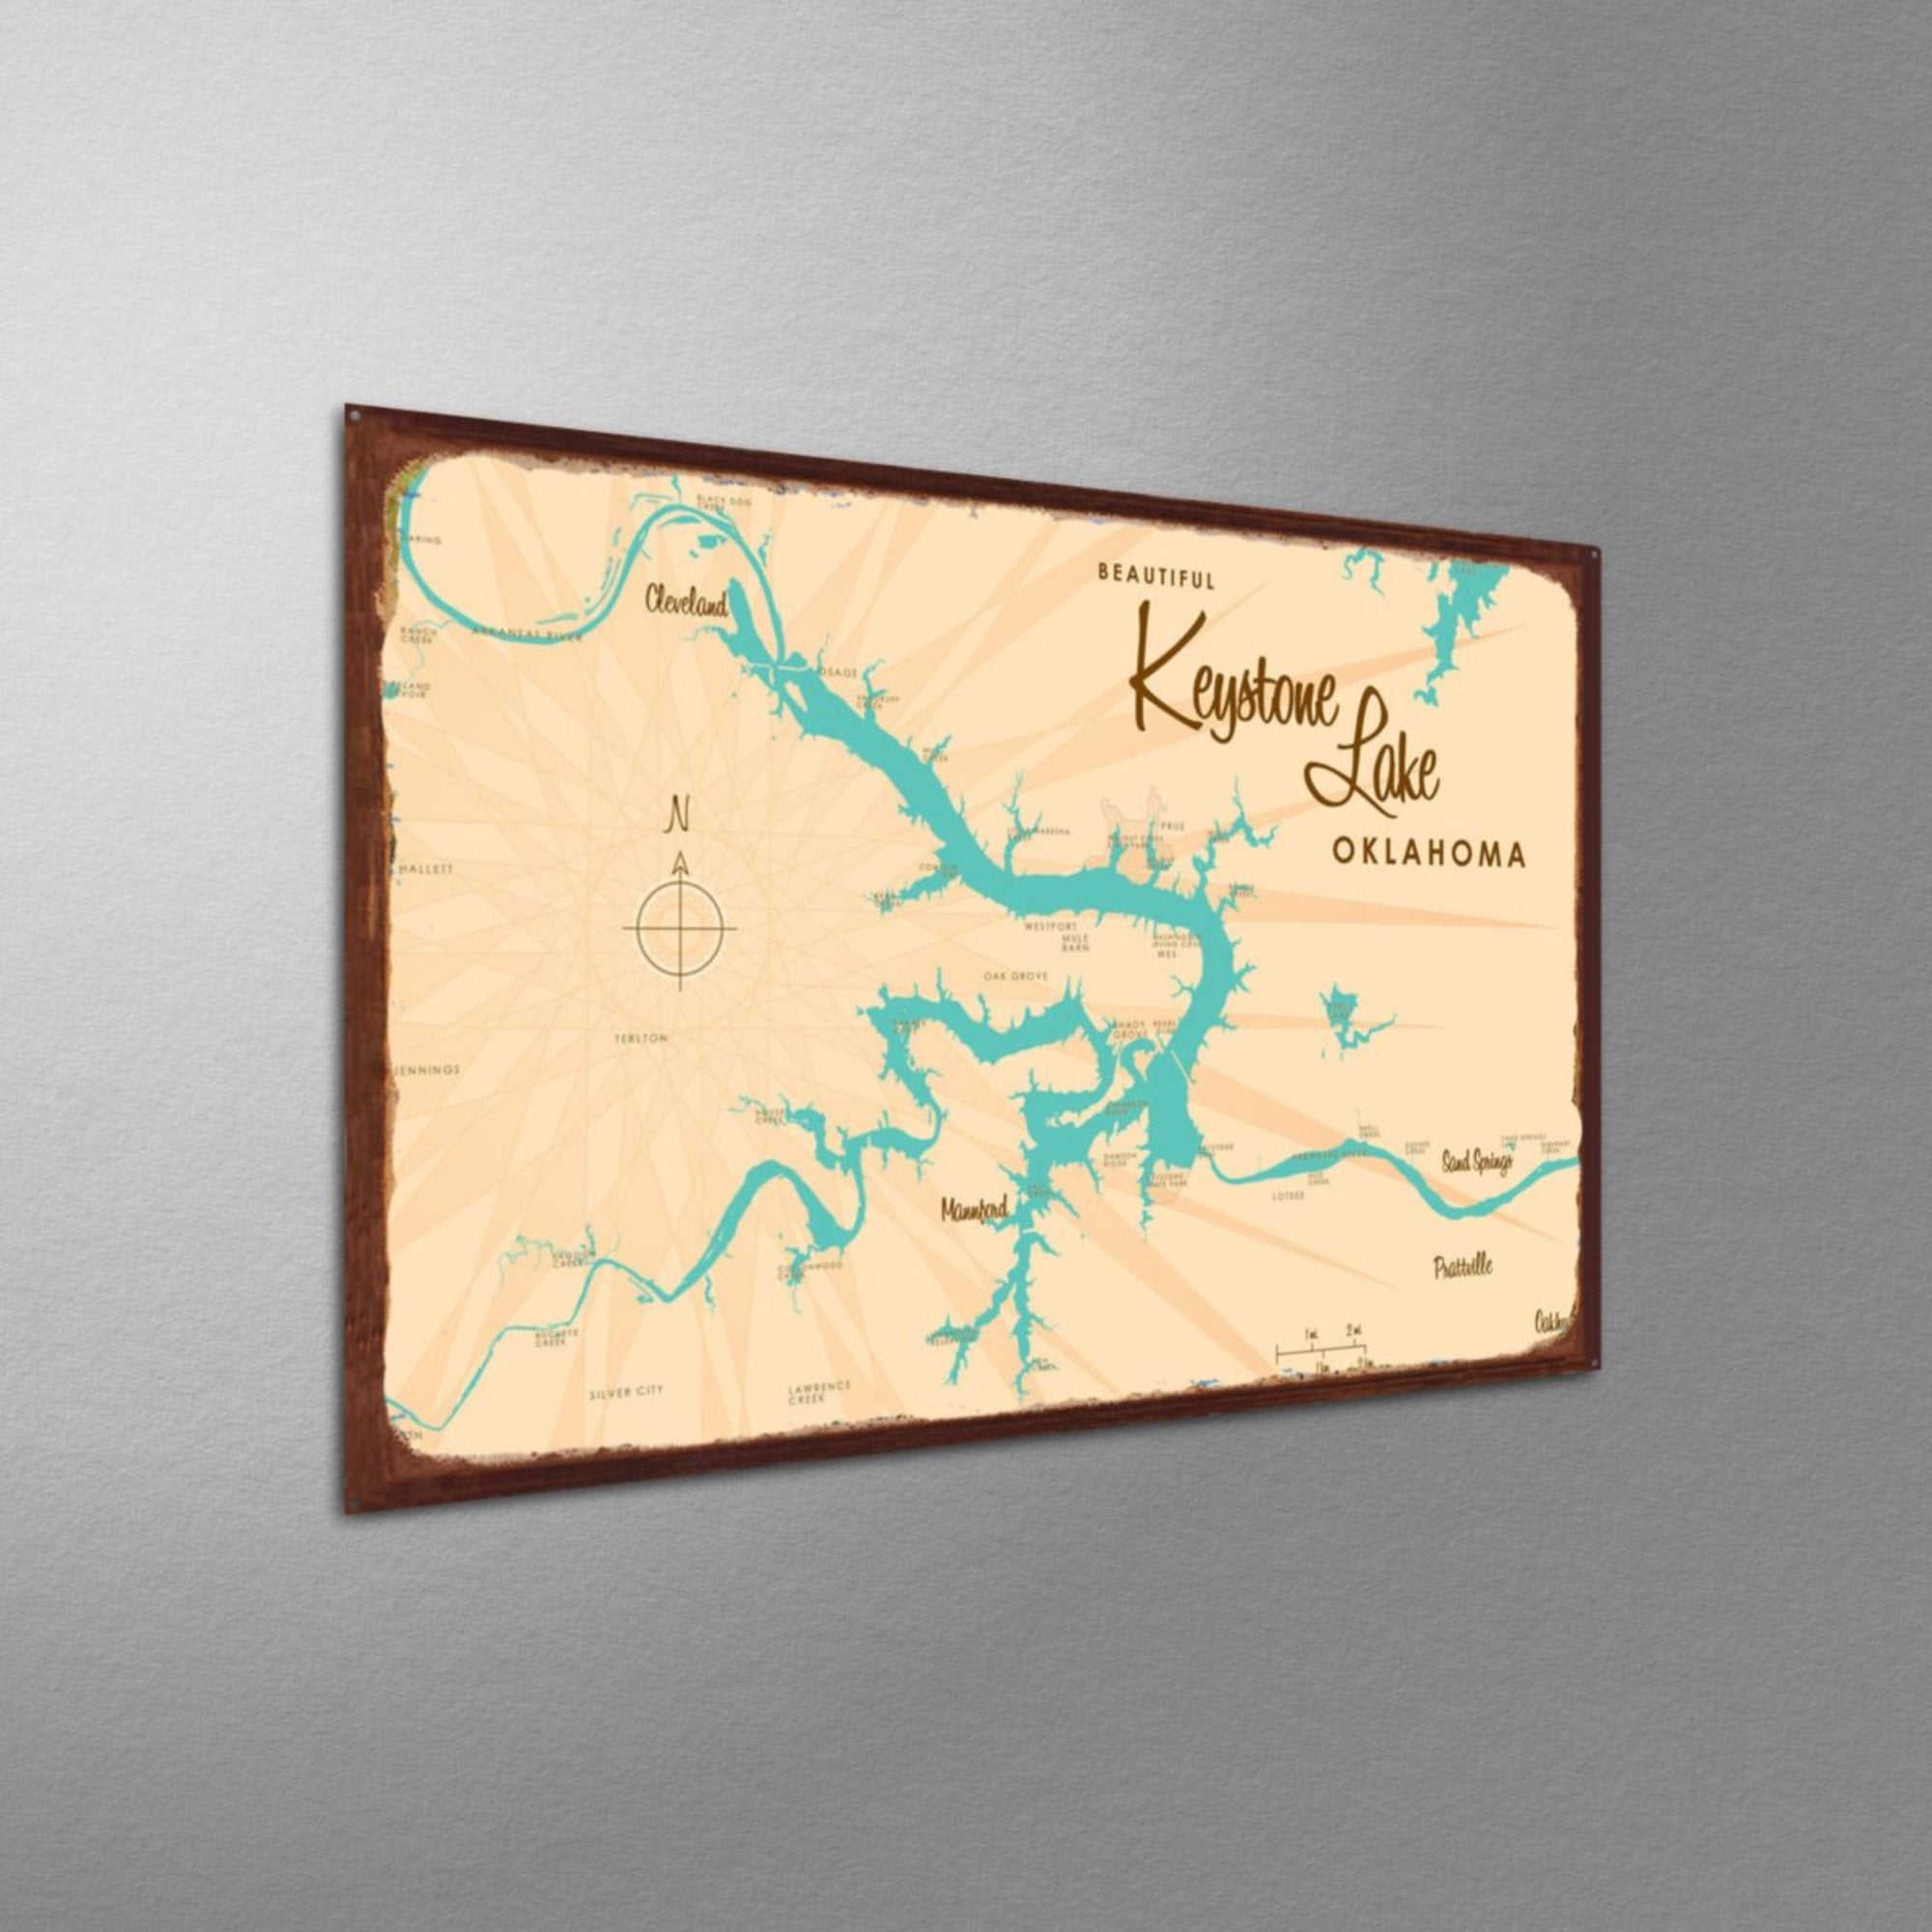 Keystone Lake Oklahoma, Rustic Metal Sign Map Art